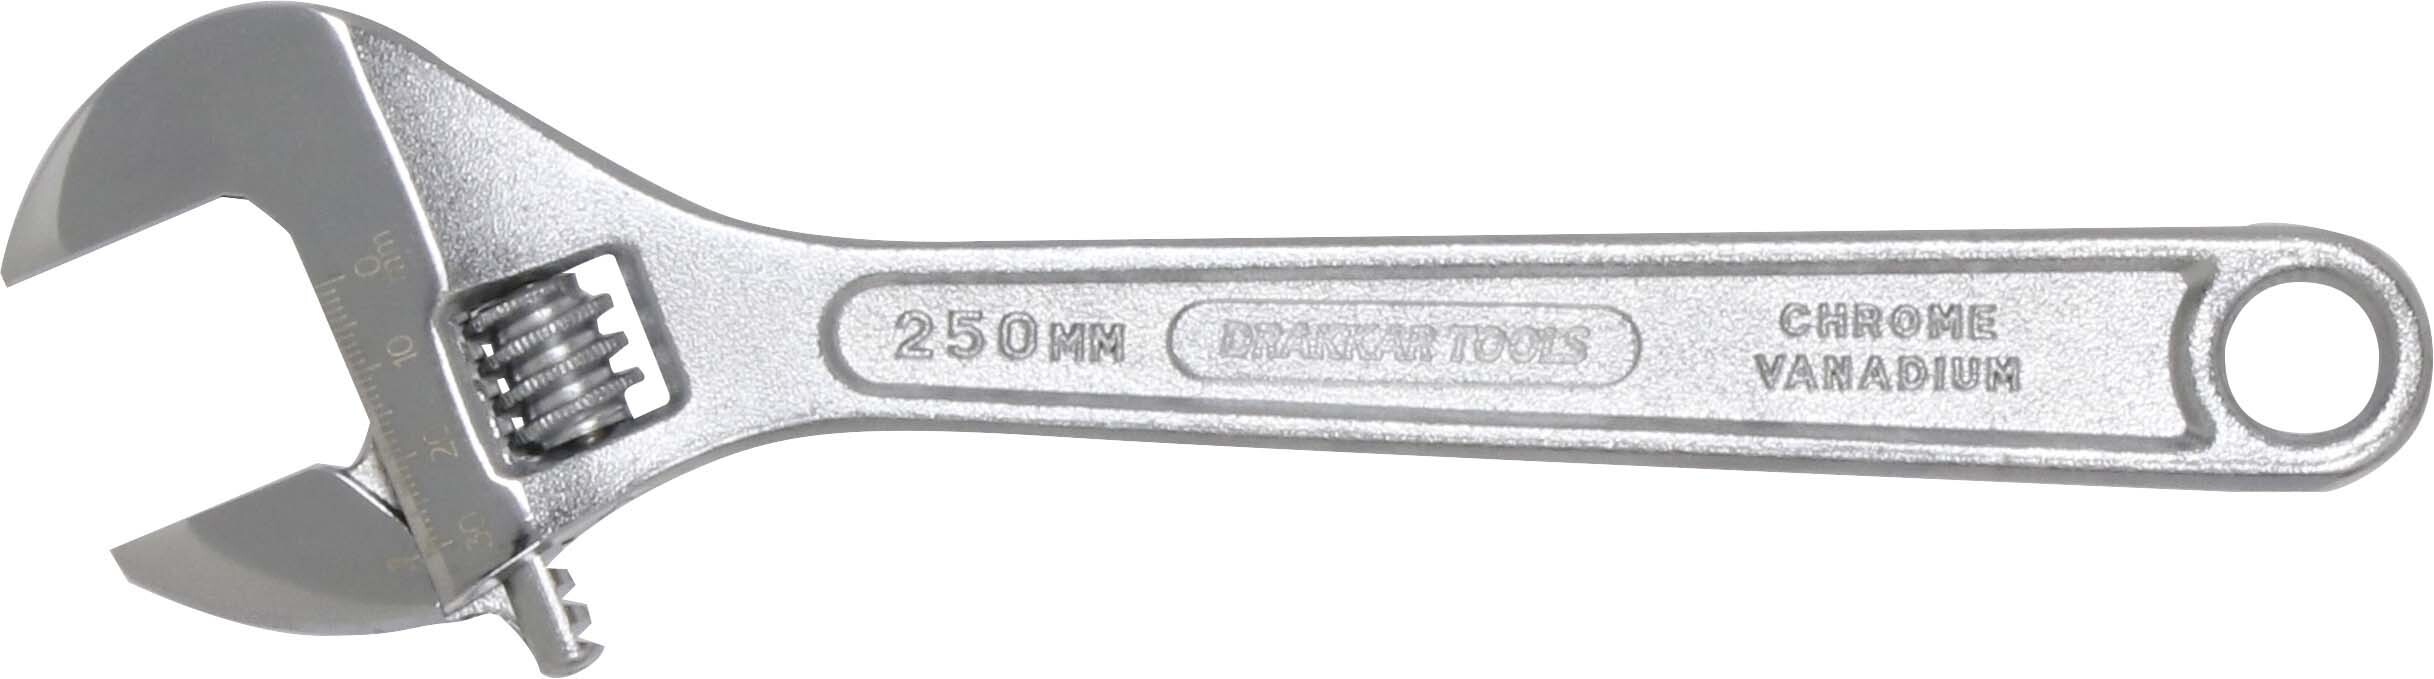 Cle a molette 250mm 10' c.v dt DRAKKAR TOOLS - 12404